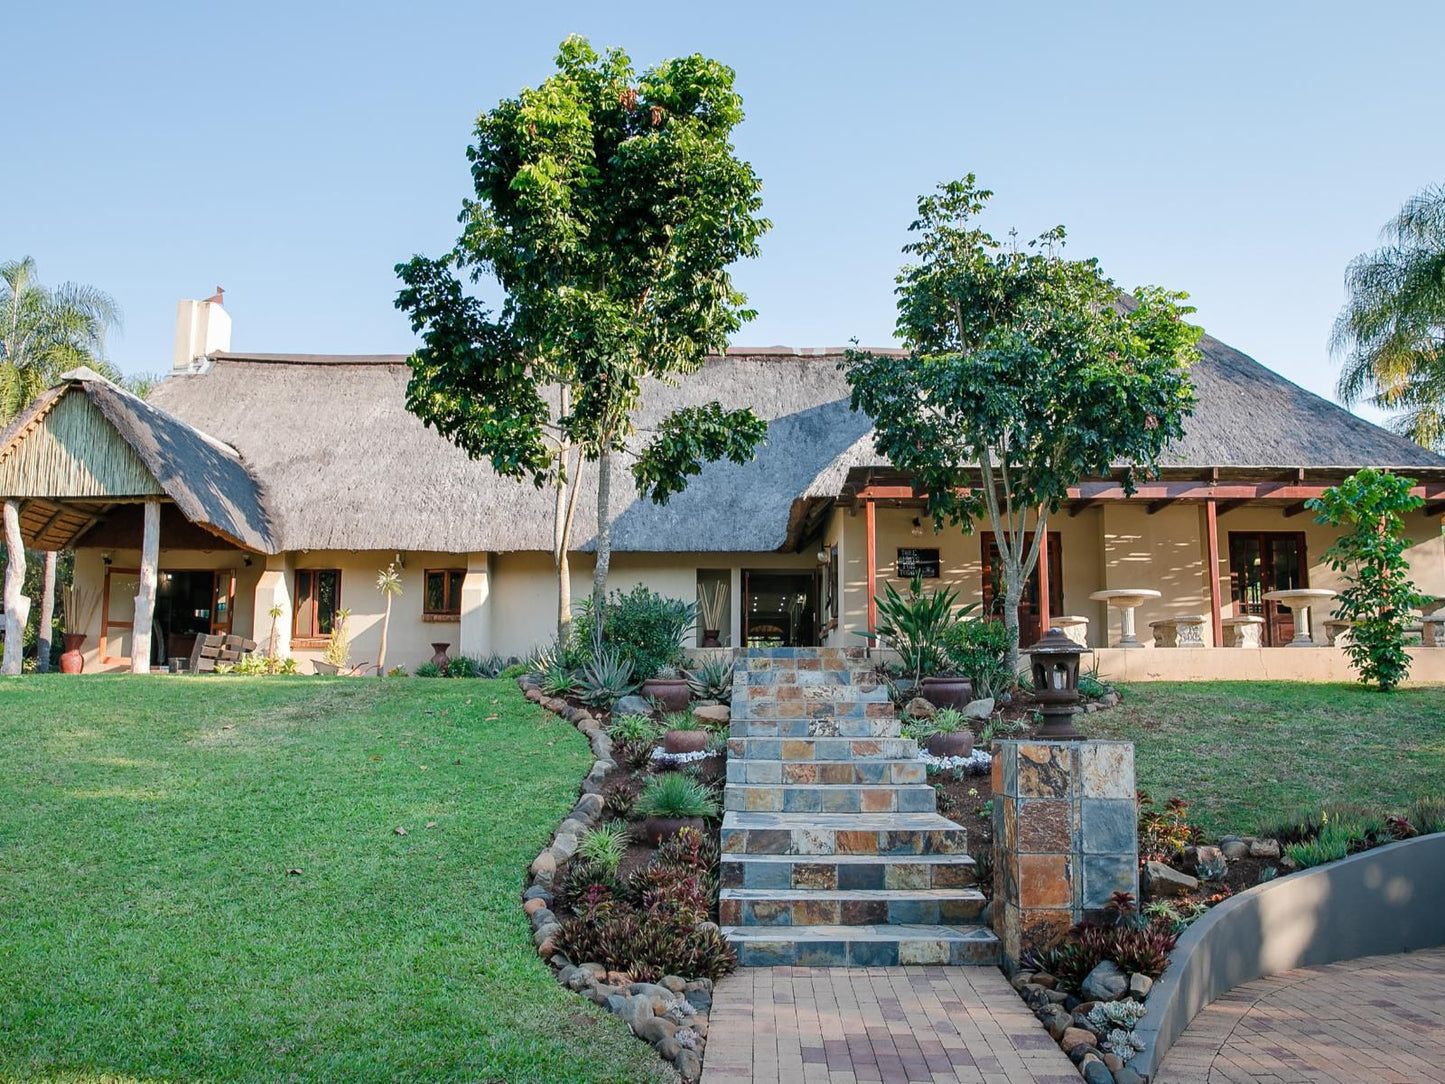 Aan De Vliet Holiday Resort Hazyview Mpumalanga South Africa House, Building, Architecture